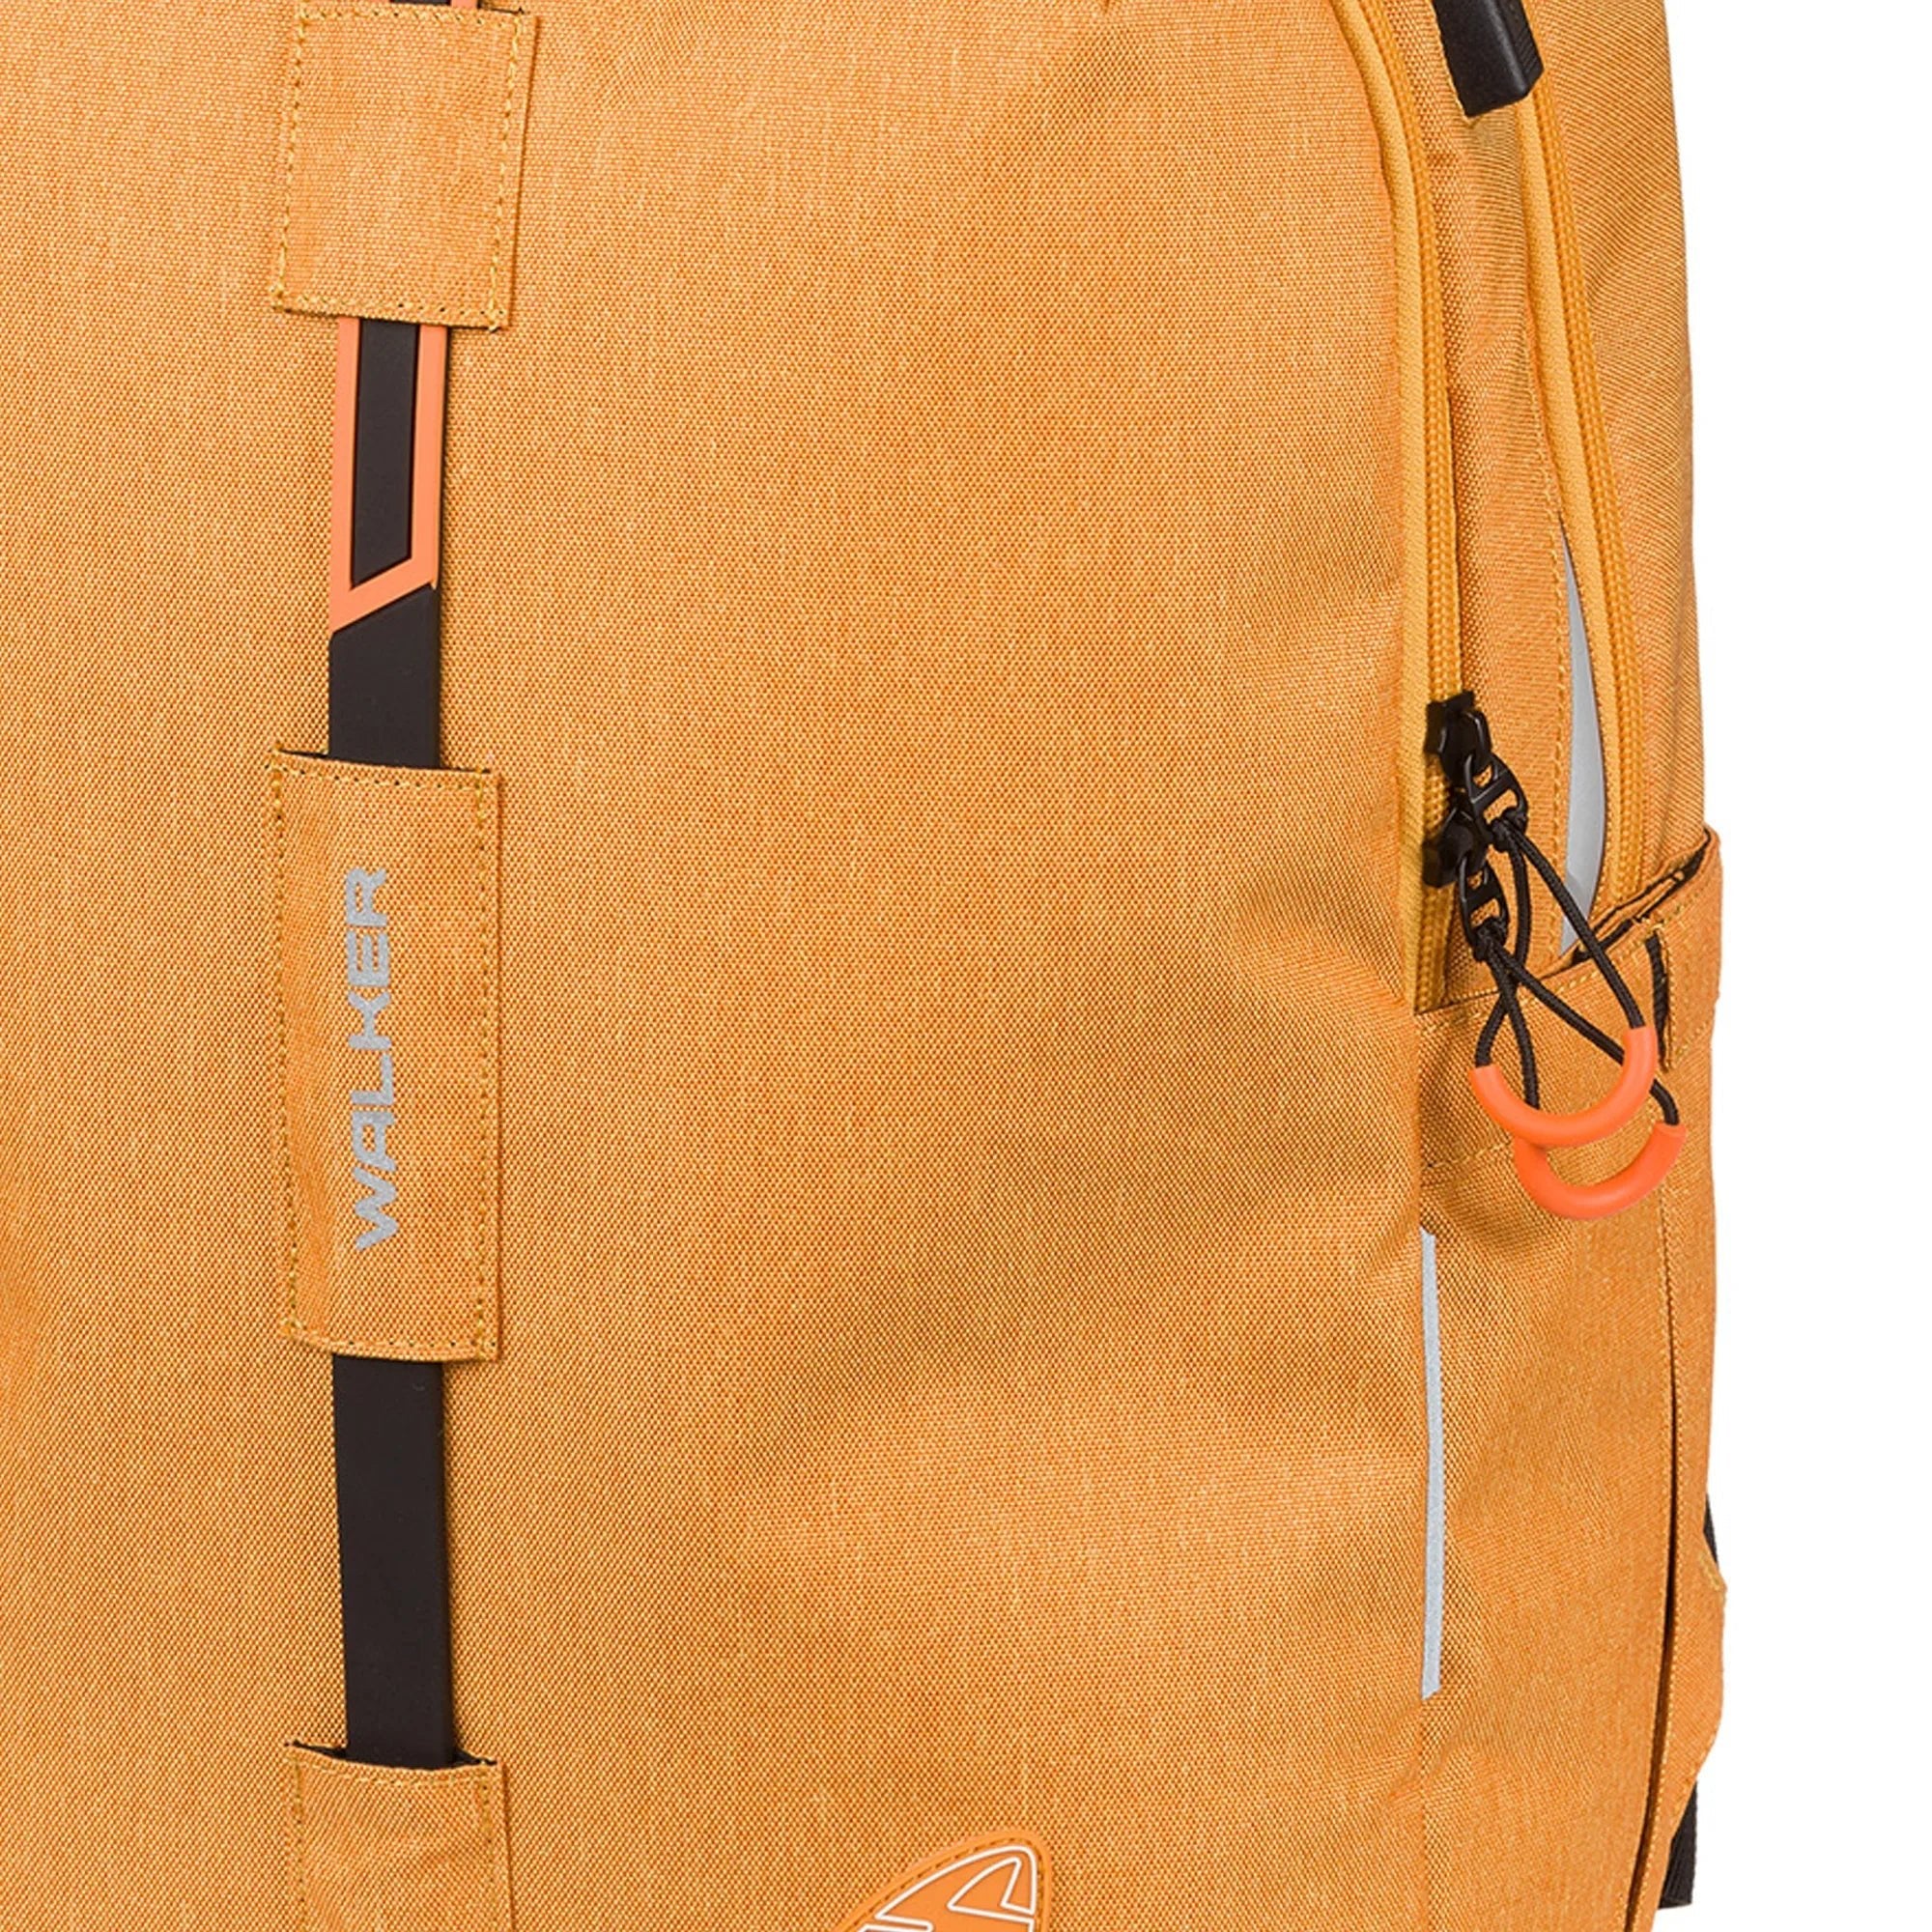 Walker Bags Elite Rucksack Melange 46 cm - Mustard Melange